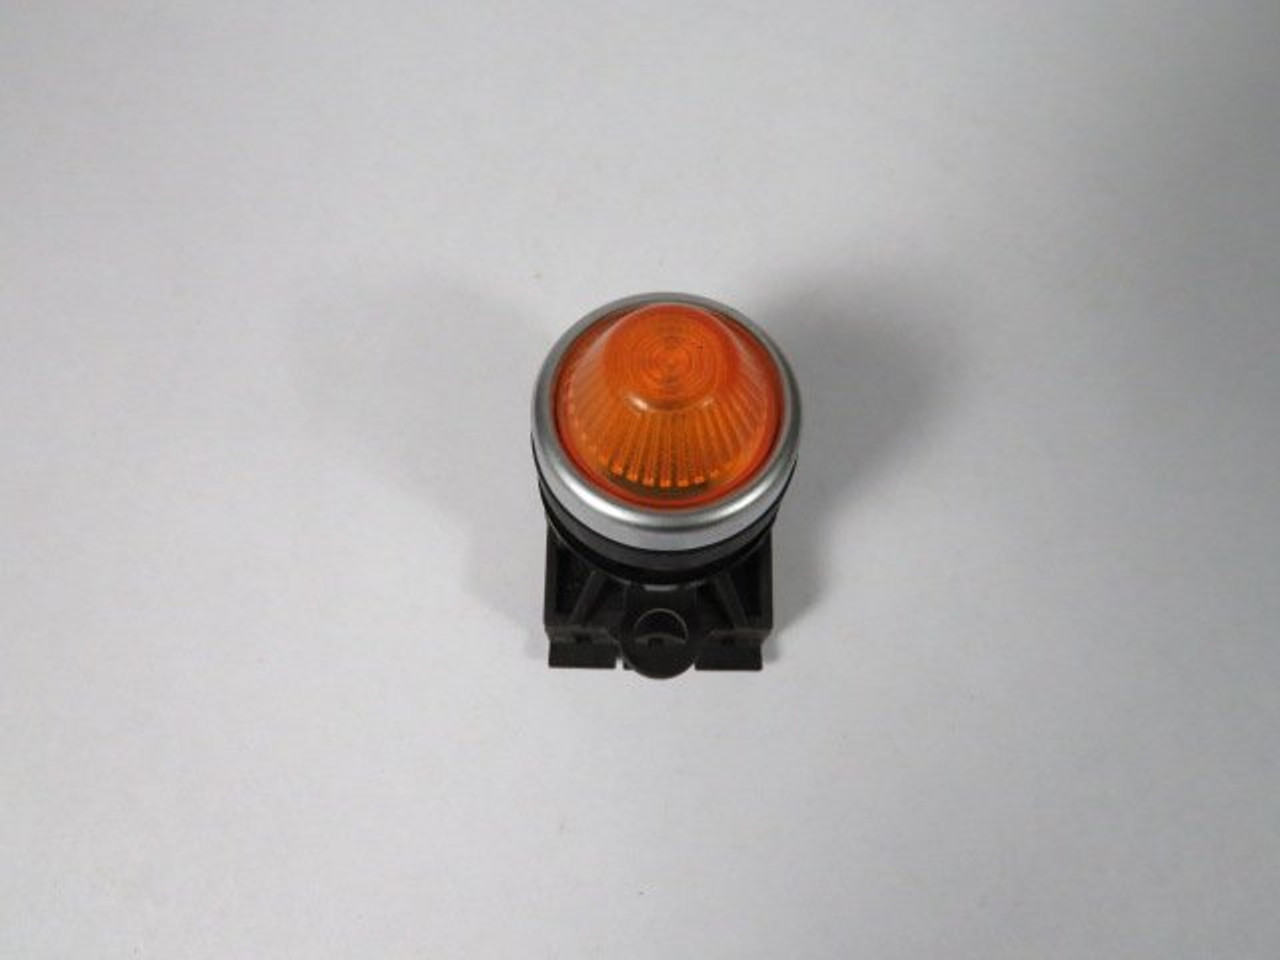 Eaton A22-RL-GE Yellow/Orange Conical Indicating Light w/ Mounting LatchUSED